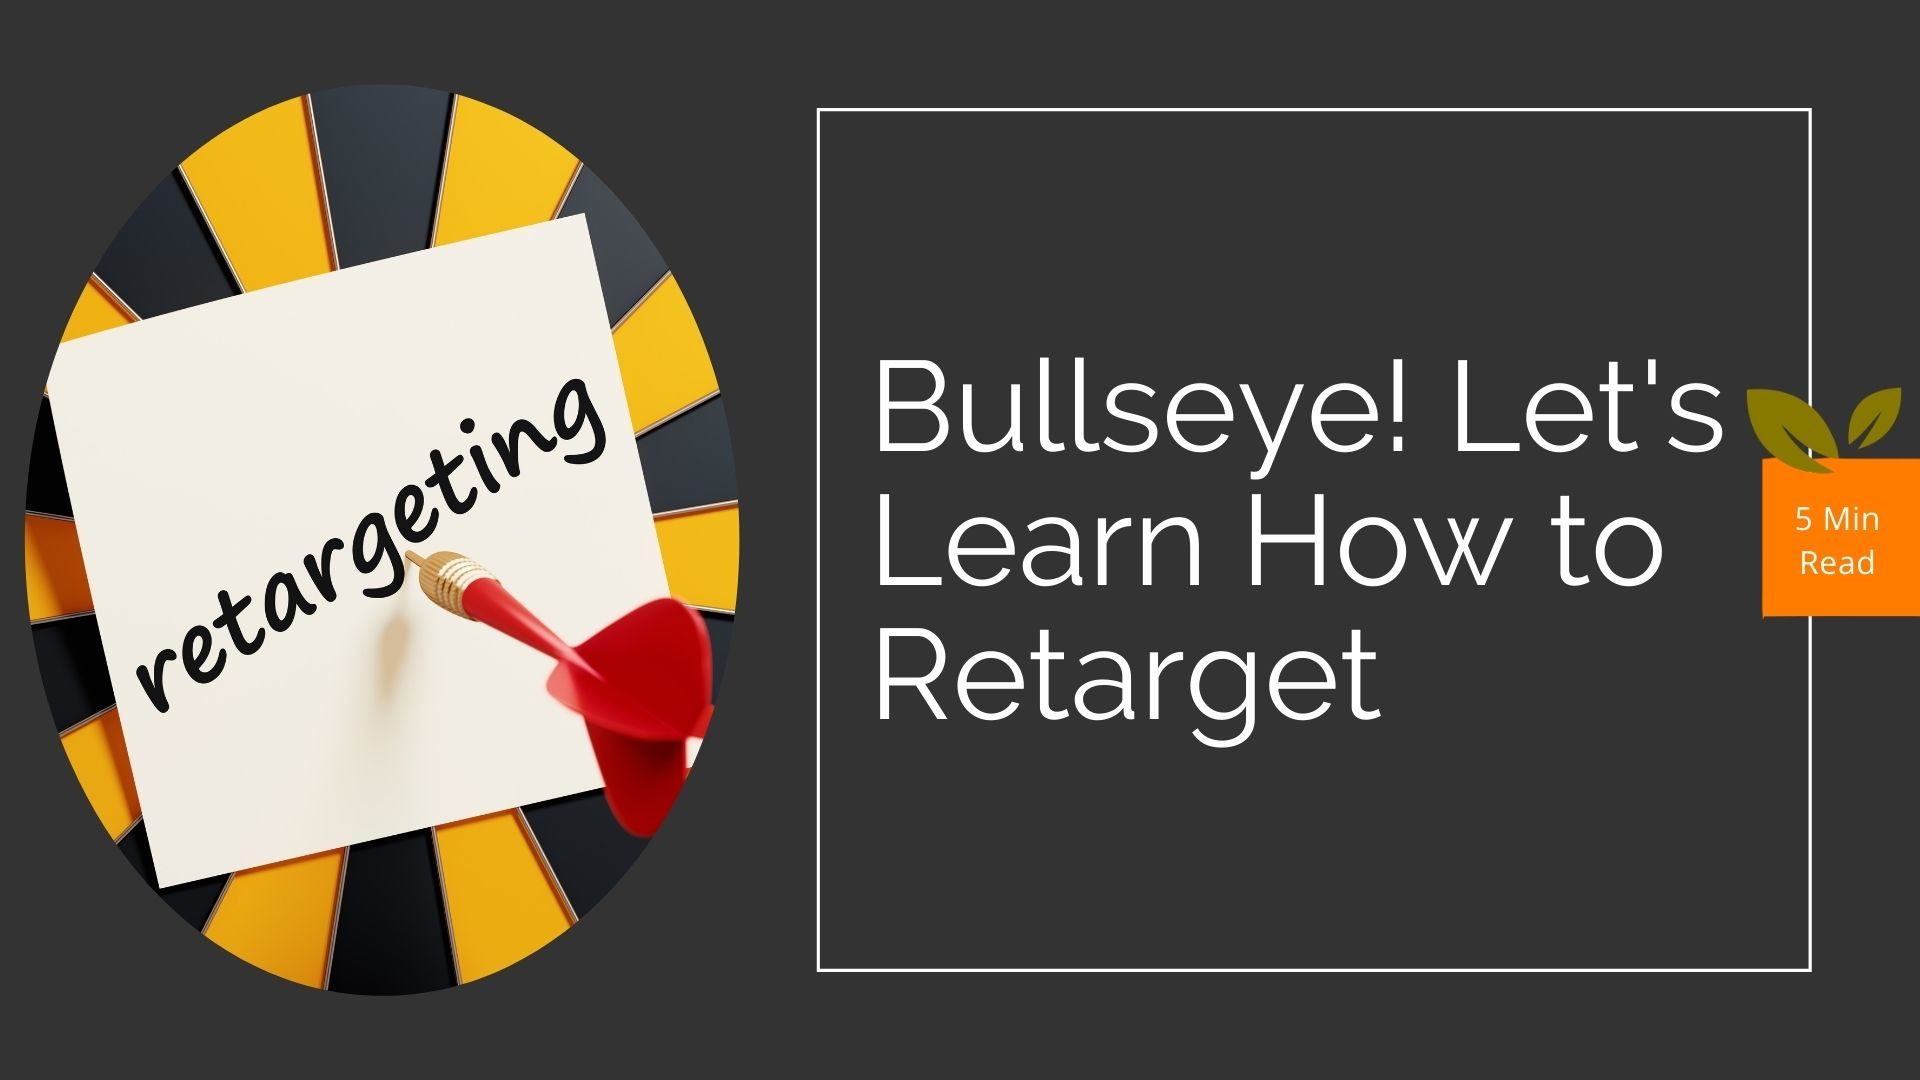 Bullseye! Let's Learn How to Retarget.